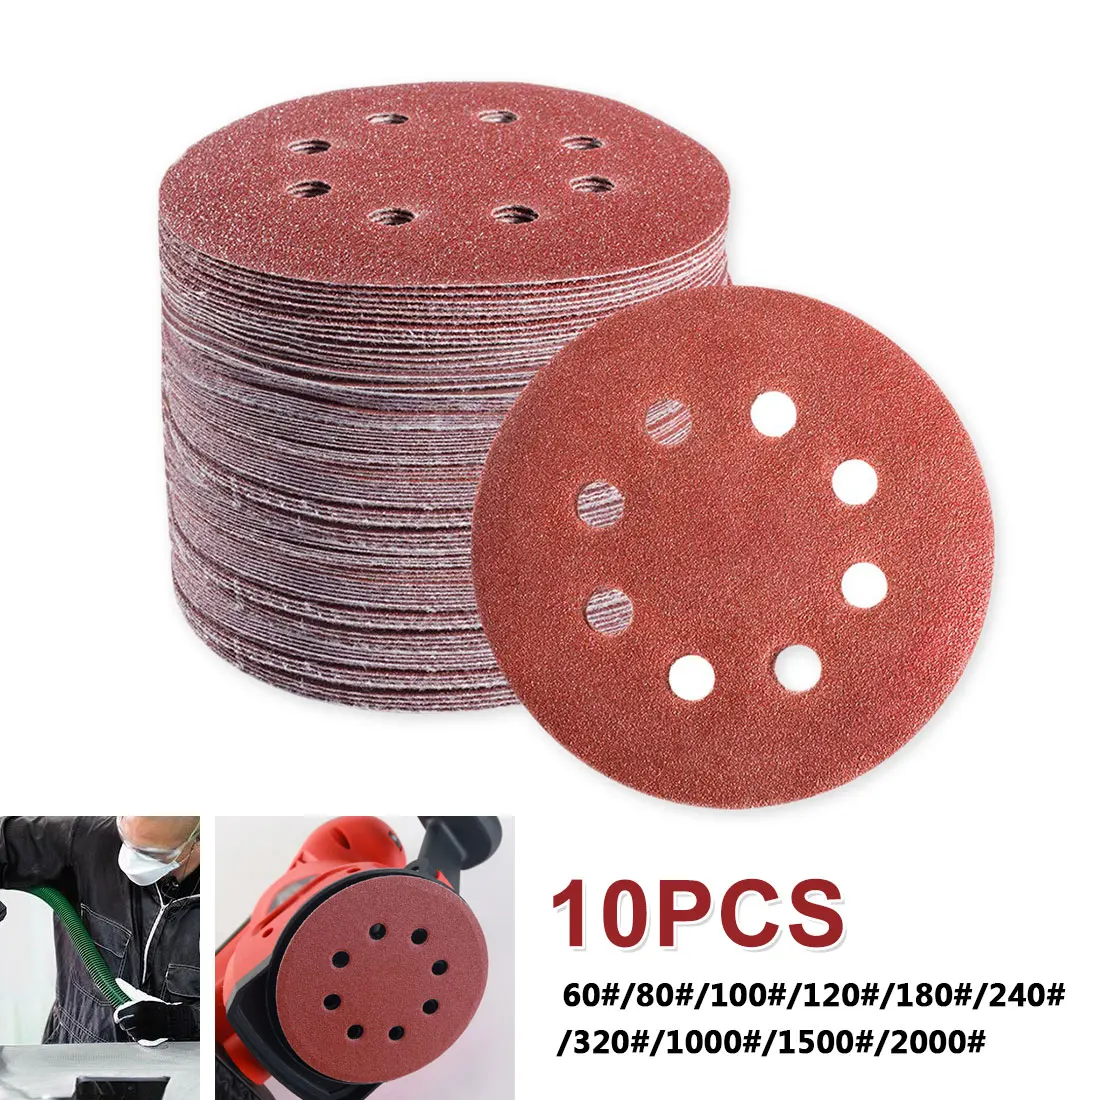 

10pcs 125mm Sandpaper Round Shape Sanding Discs Hook Loop Sanding Paper Polishing Sheet Sandpaper 8 Holes Sander Polishing Pad